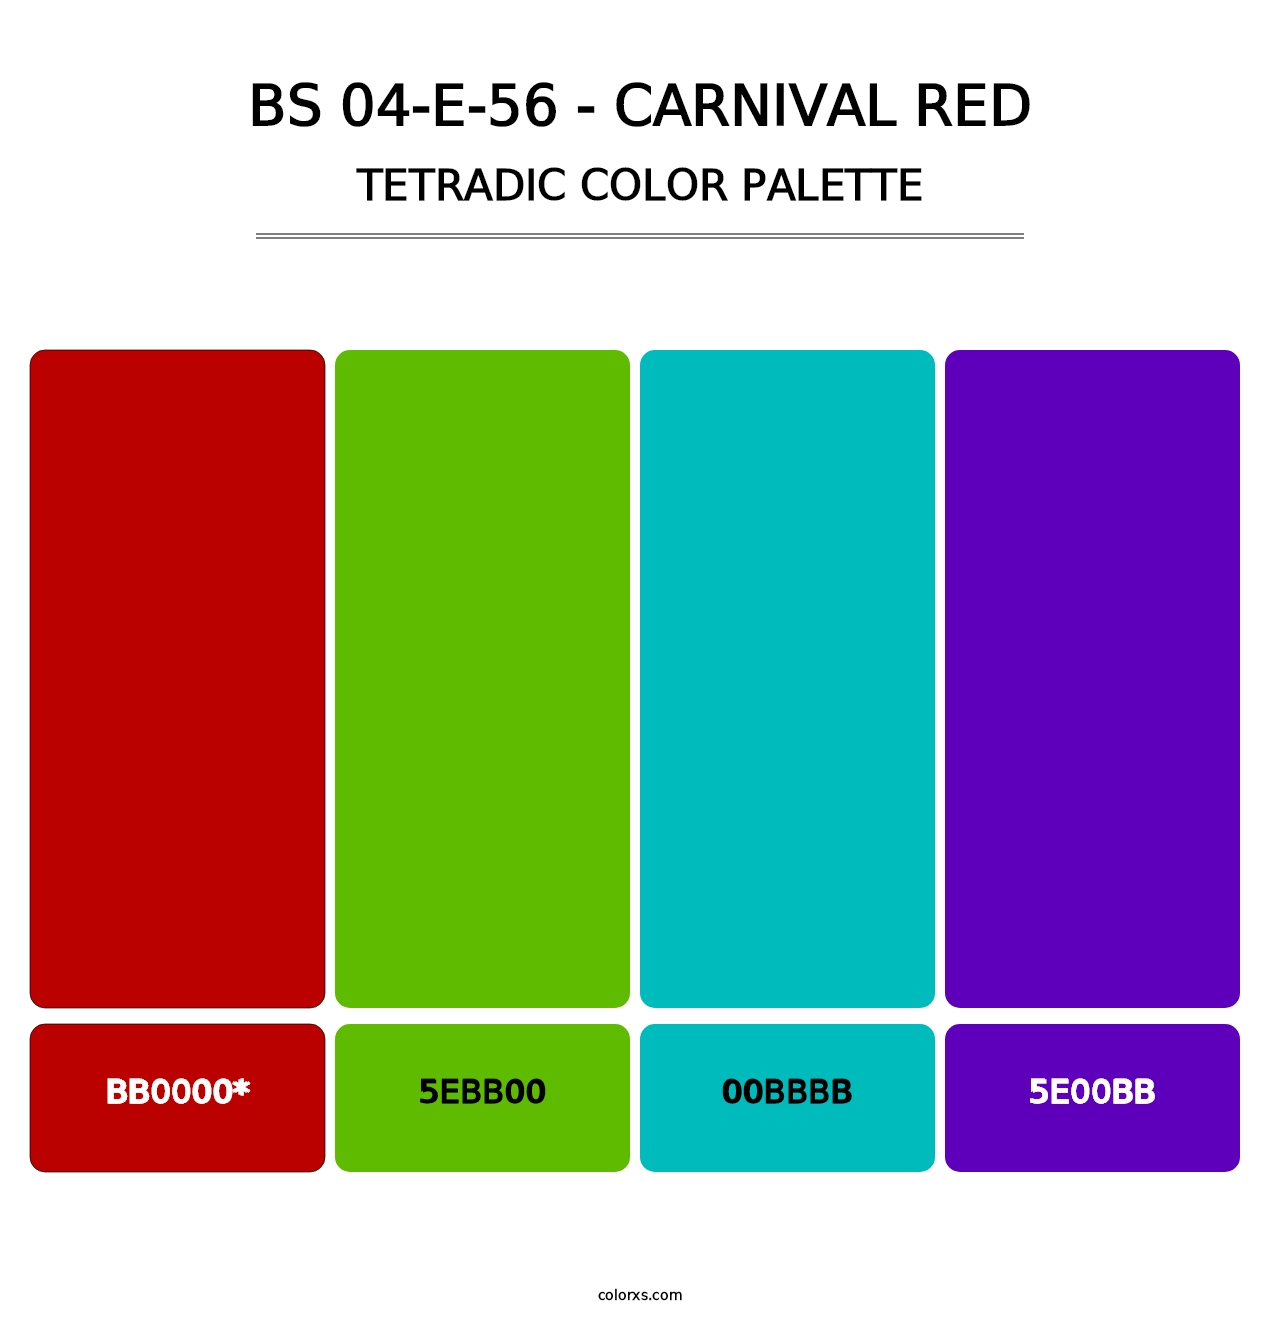 BS 04-E-56 - Carnival Red - Tetradic Color Palette